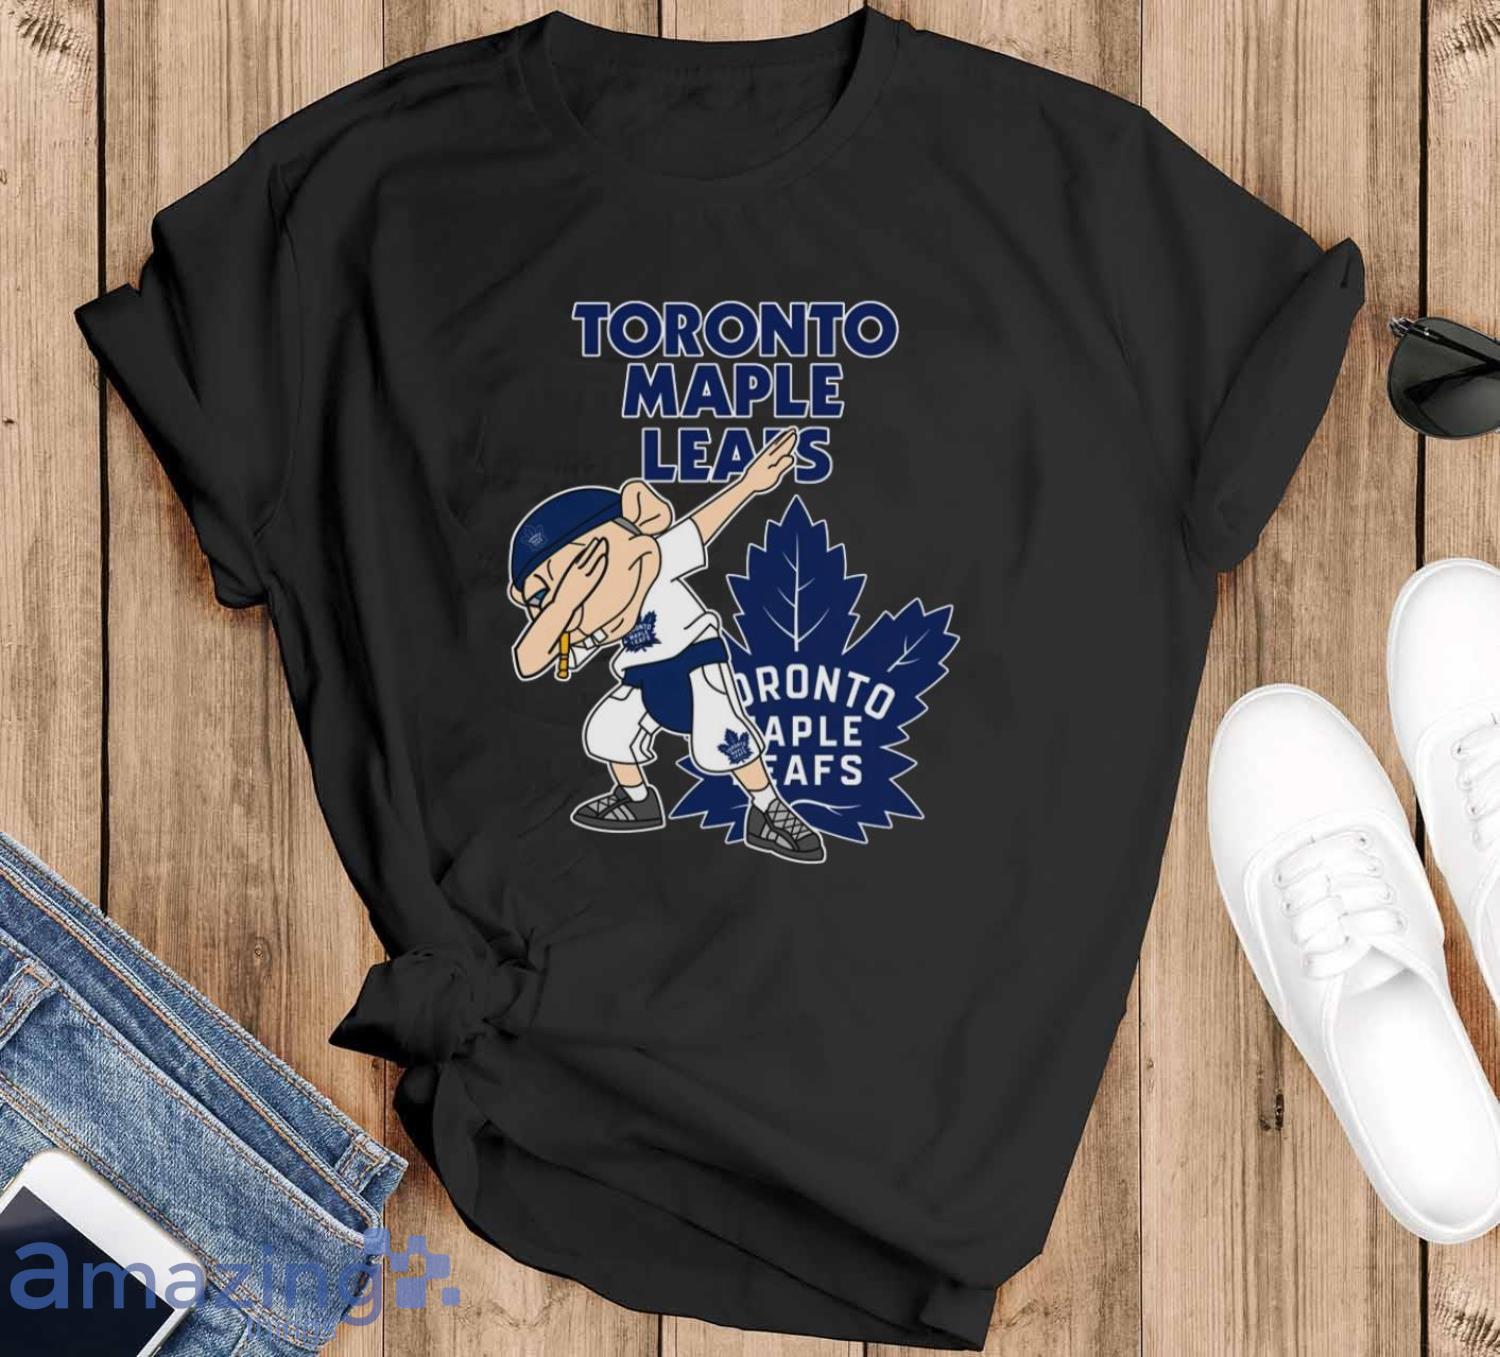 Toronto Maple Leafs Nhl NHL Hoodie - Small Grey Cotton